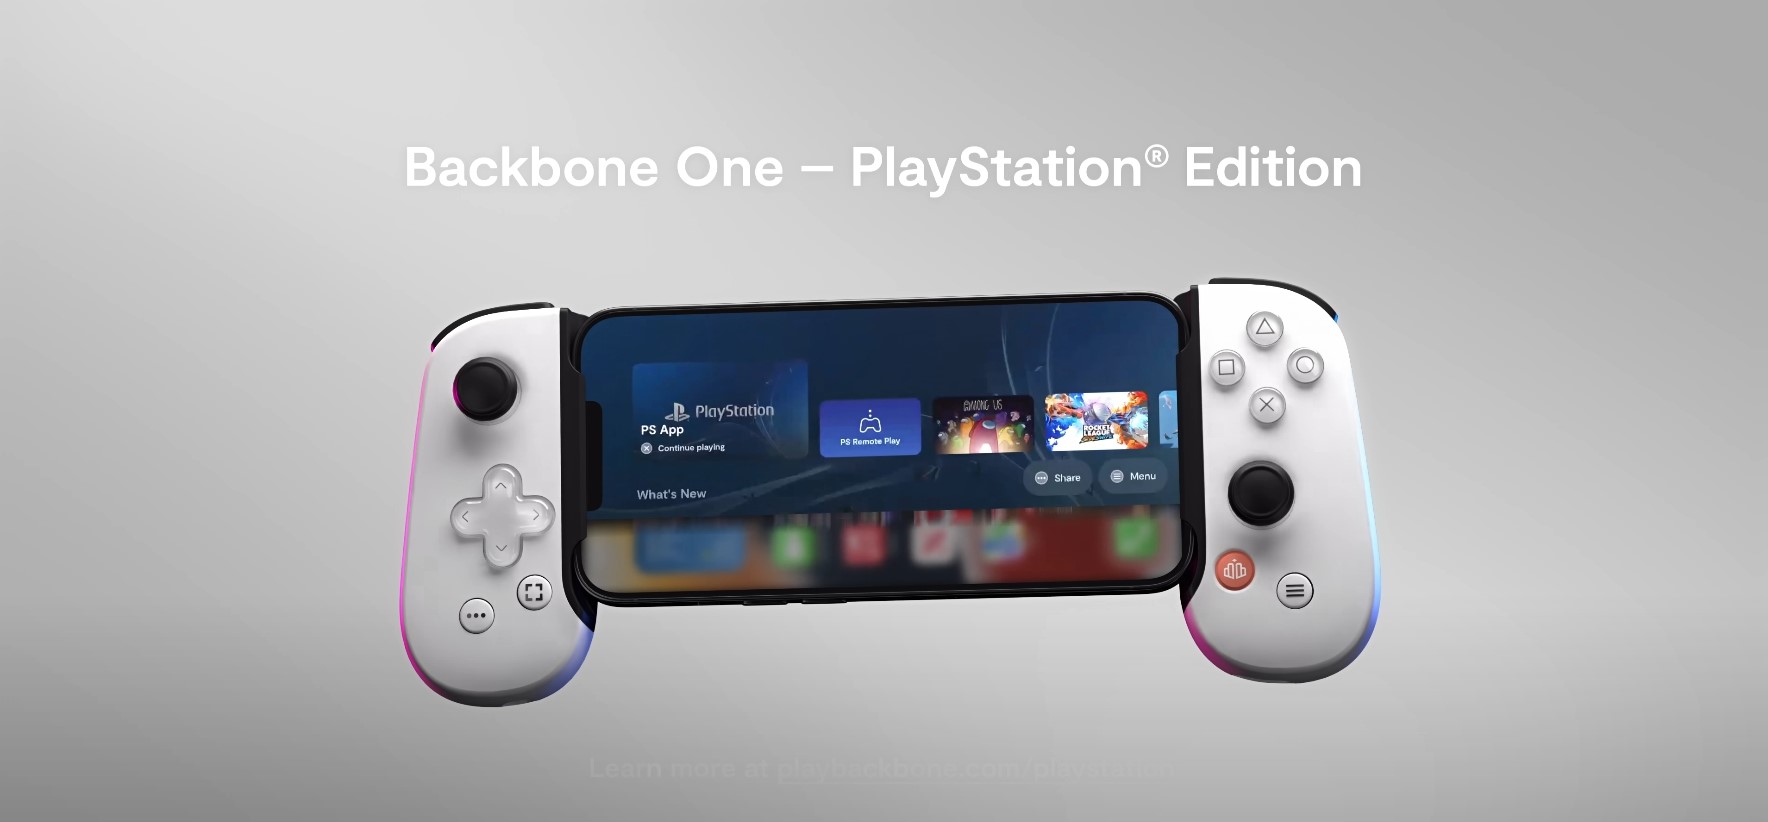 Mostantól Android mobilokhoz is elérhető a Backbone One PlayStation Edition kontroller